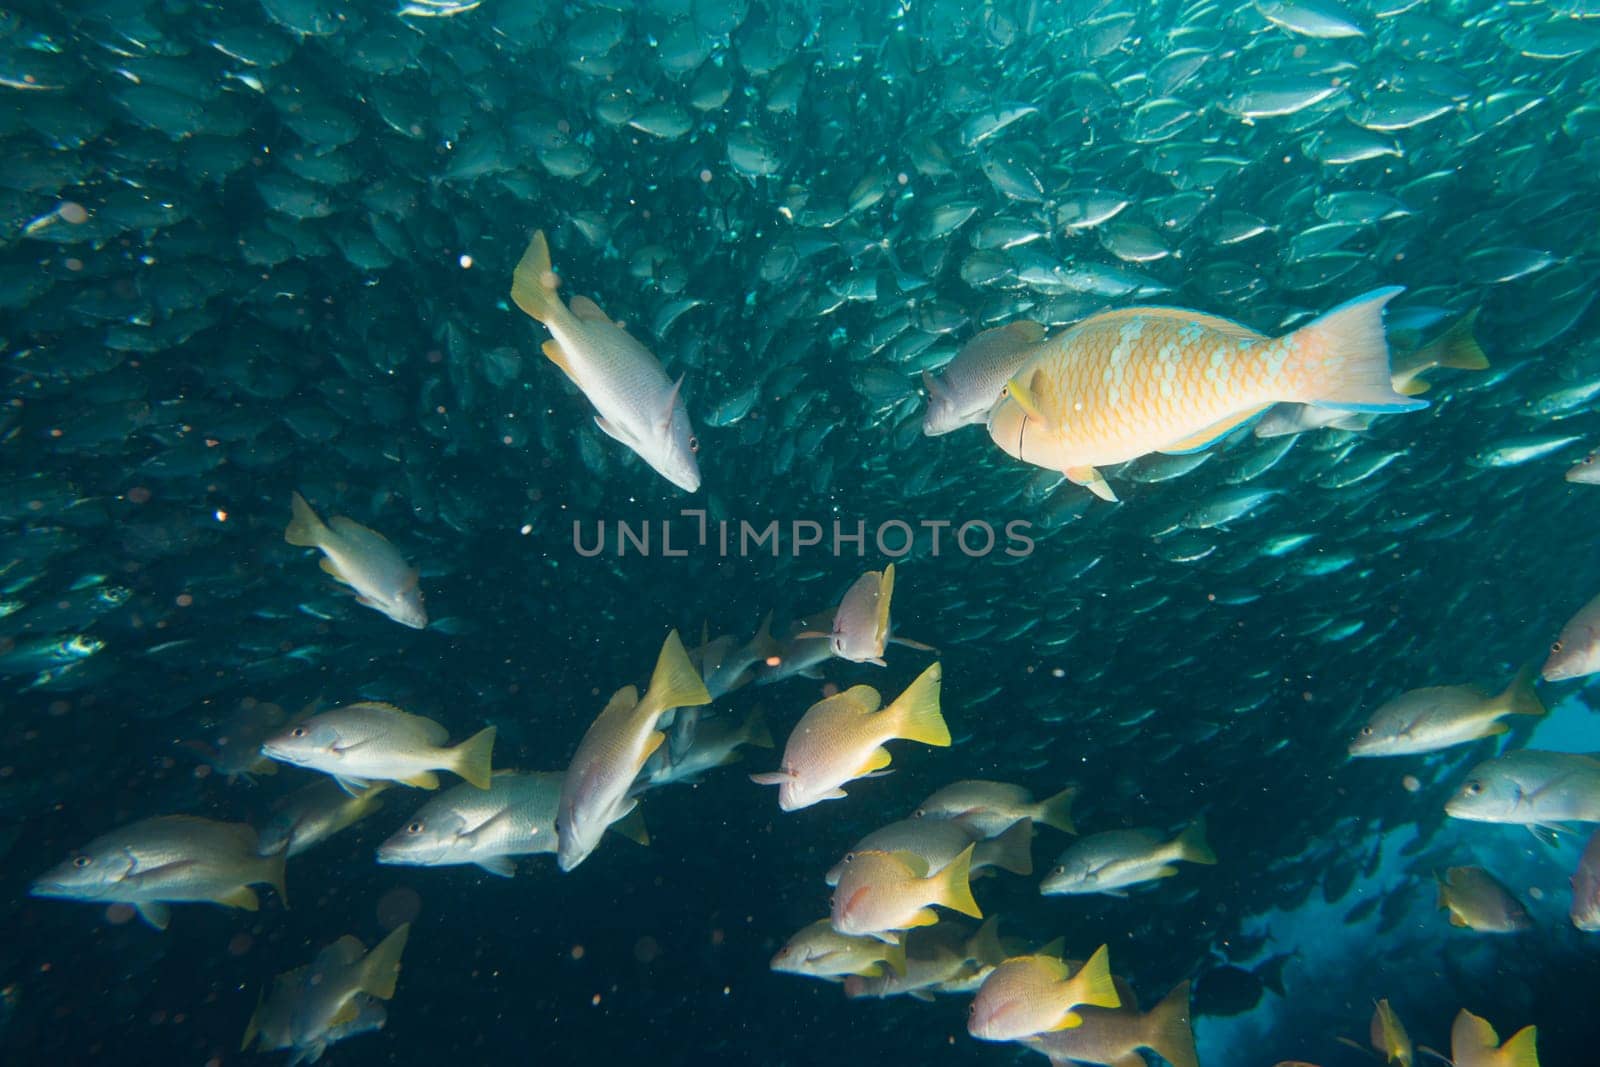 Inside a school of fish underwater by AndreaIzzotti